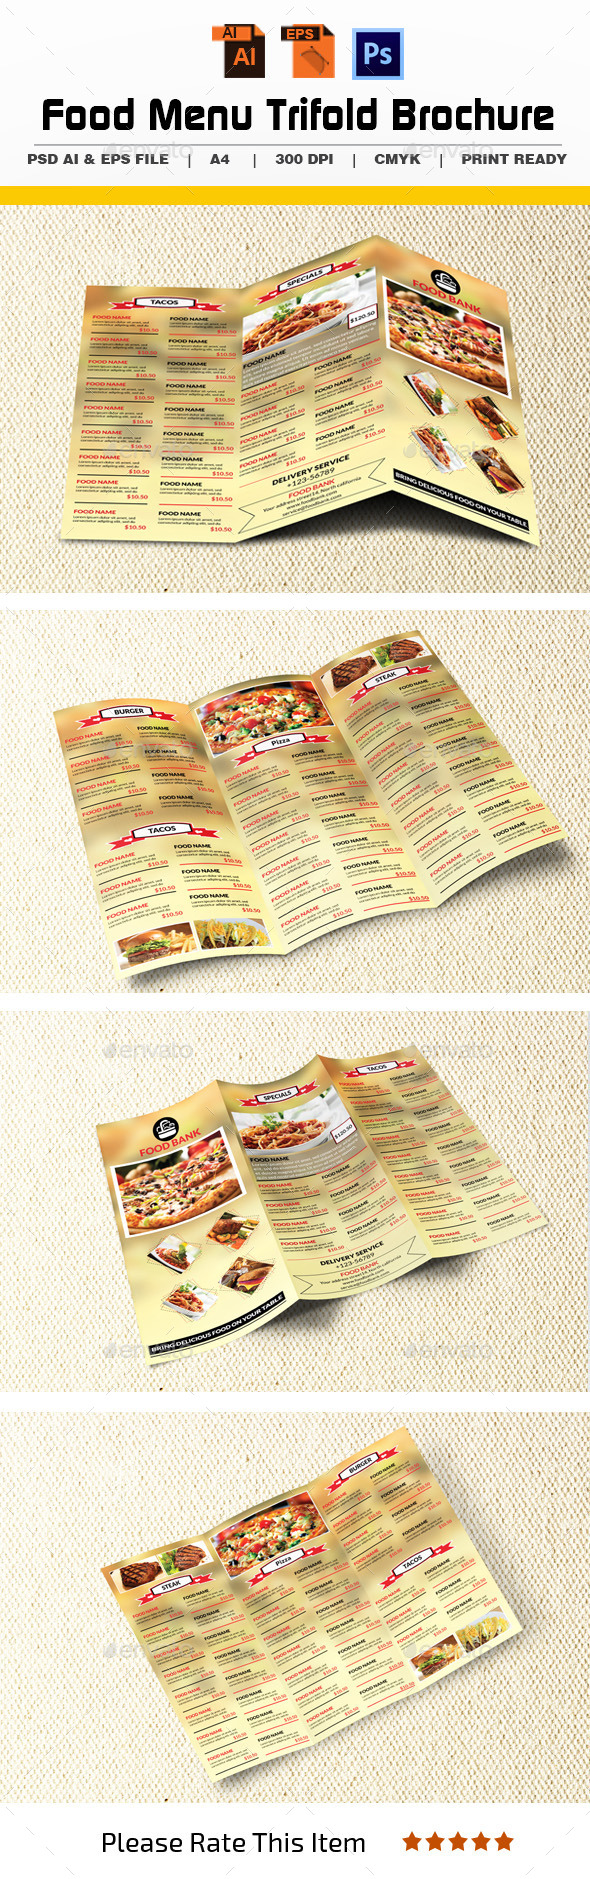 Food Menu Trifold Brochure